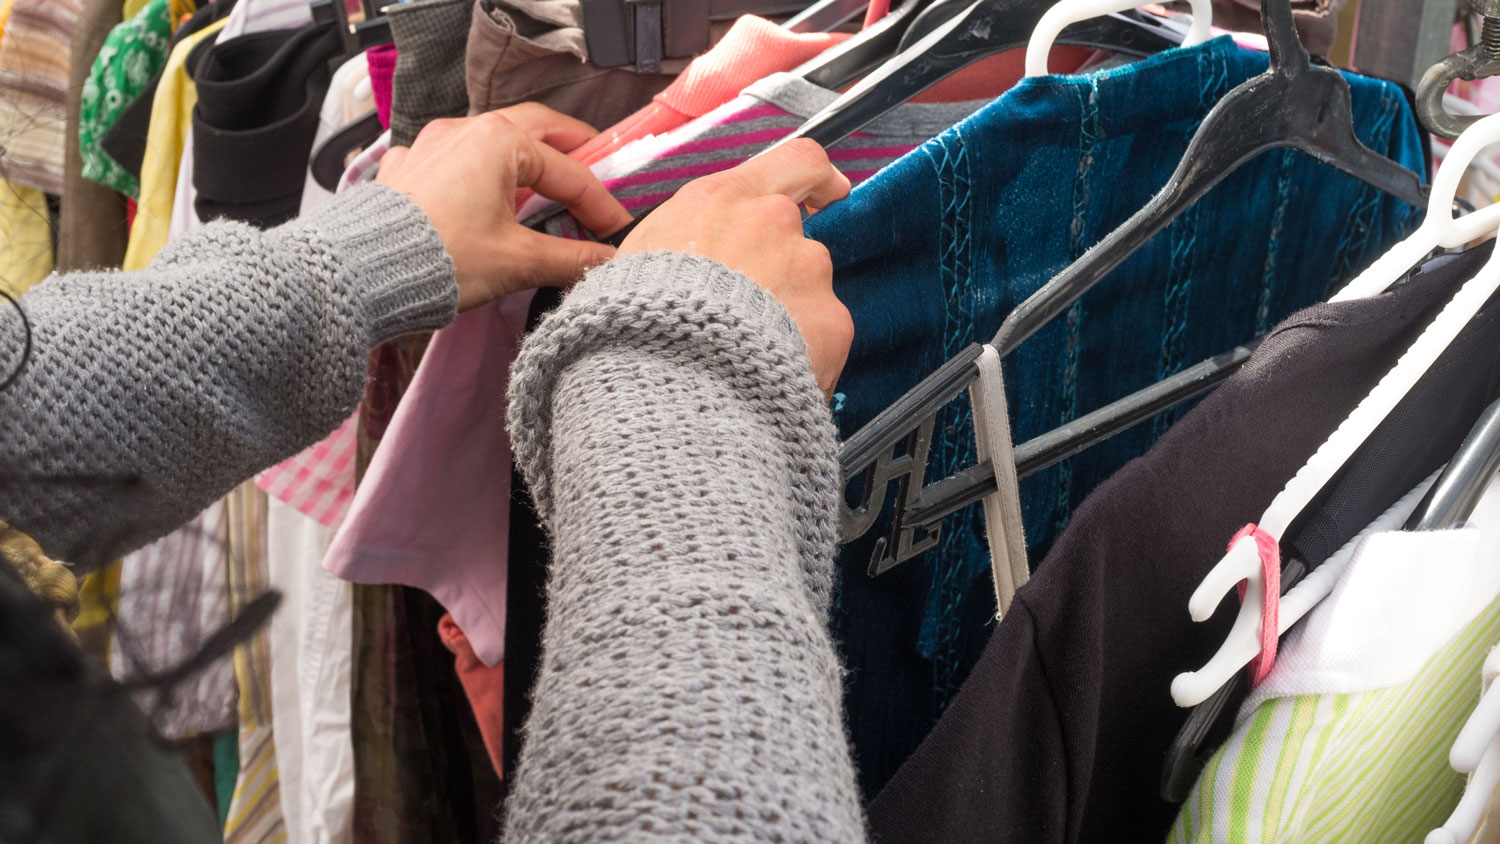 Woman sorting through a garage sale clothes rack